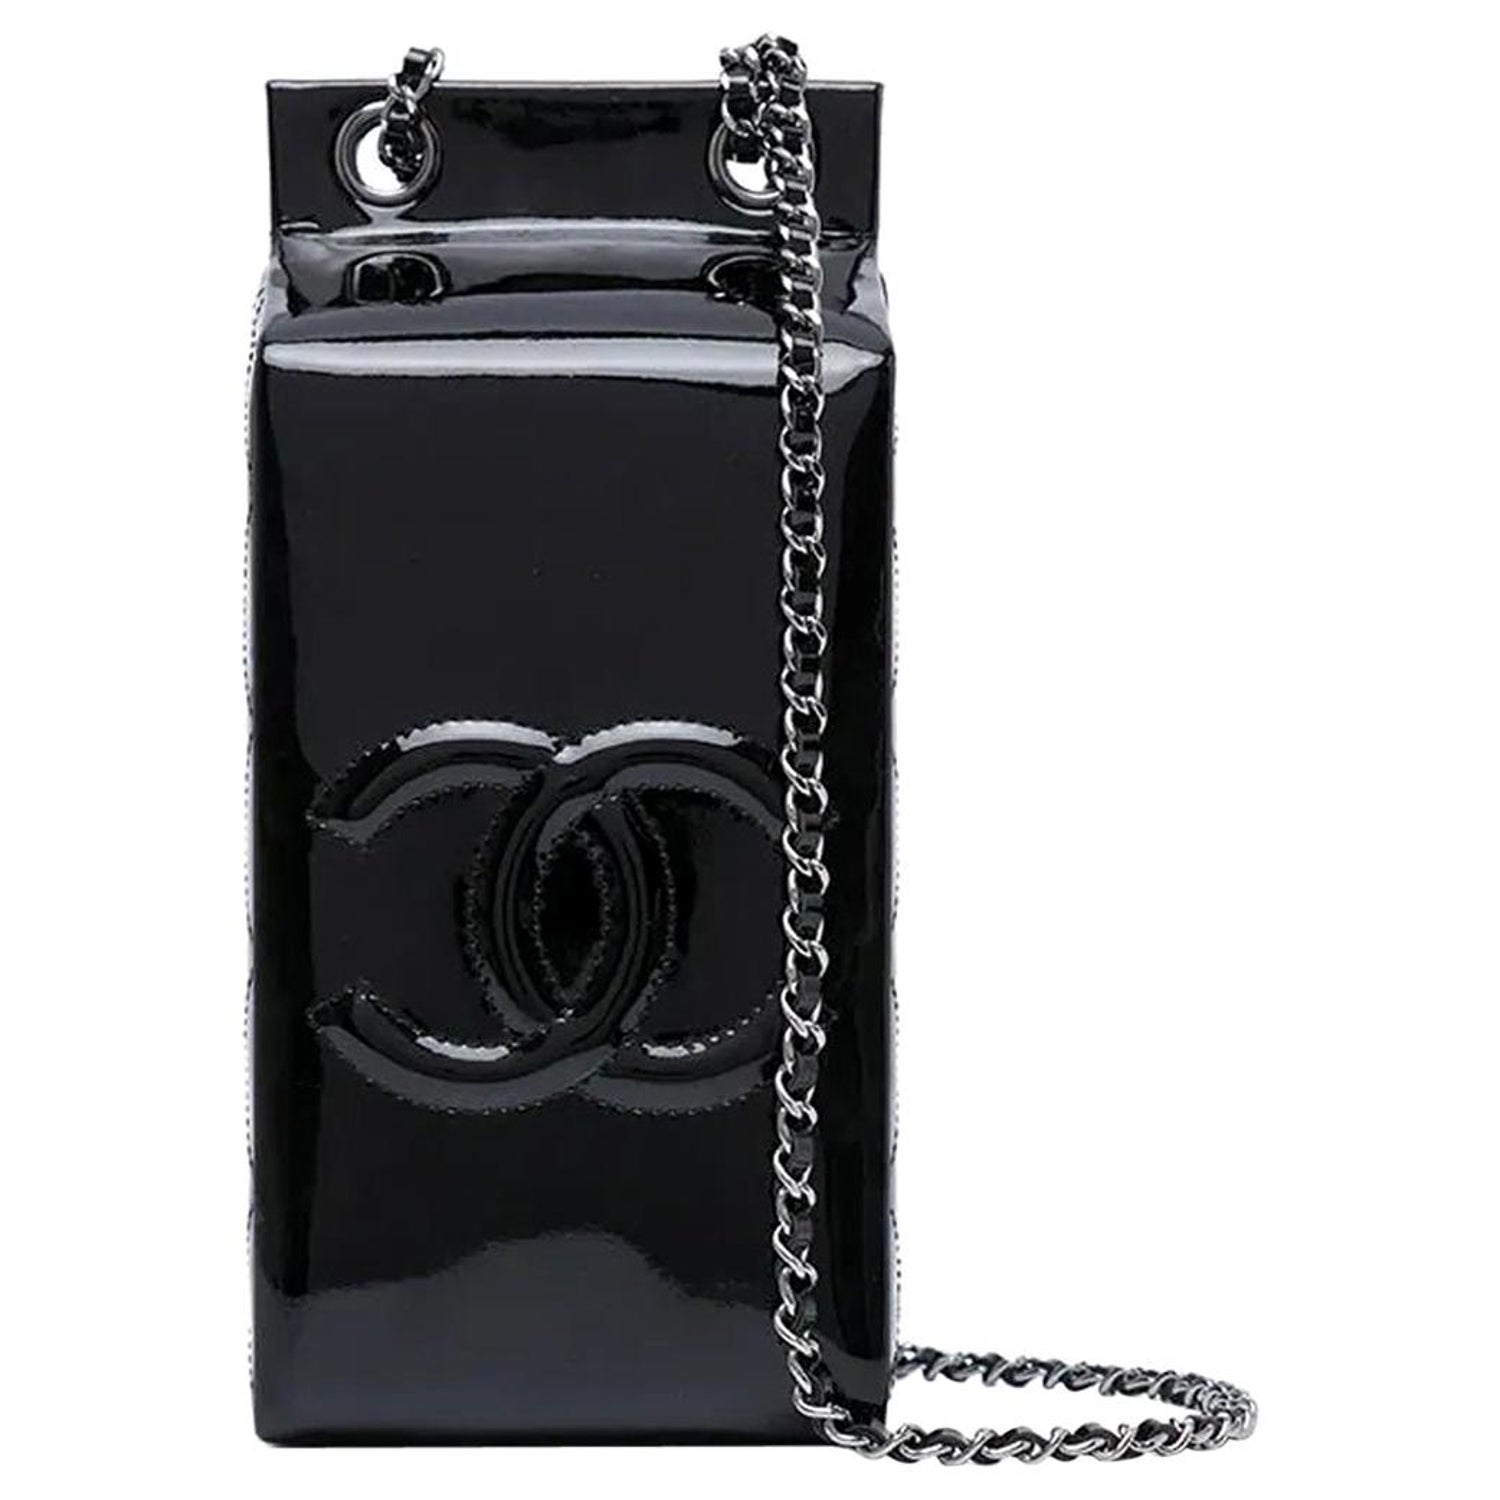 Chanel Milk Carton - For Sale on 1stDibs | chanel milk carton bag, silver  chanel milk carton bag, chanel milk bag